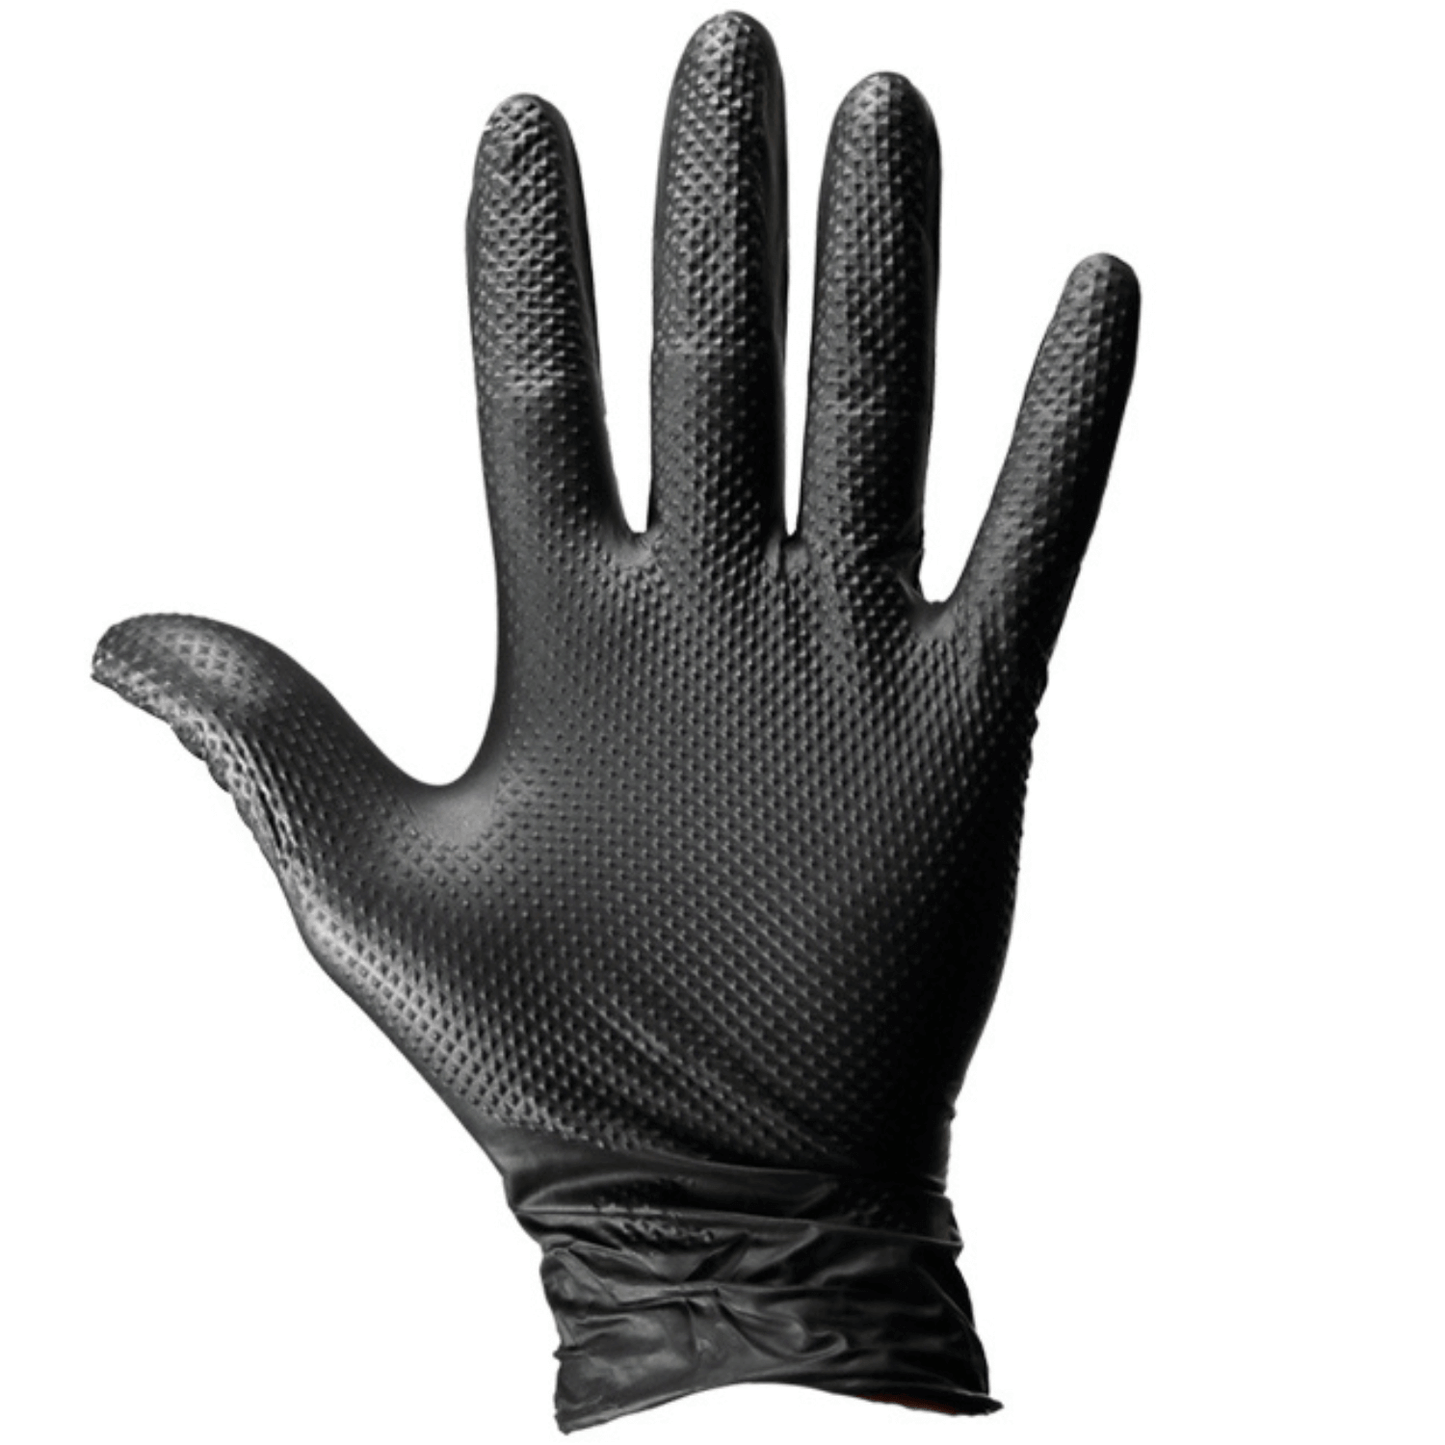 Dirt Defense 6mil Diamond Grip Nitrile Gloves Medium 100 Pack 671161 Harvest & Extraction 816731017480